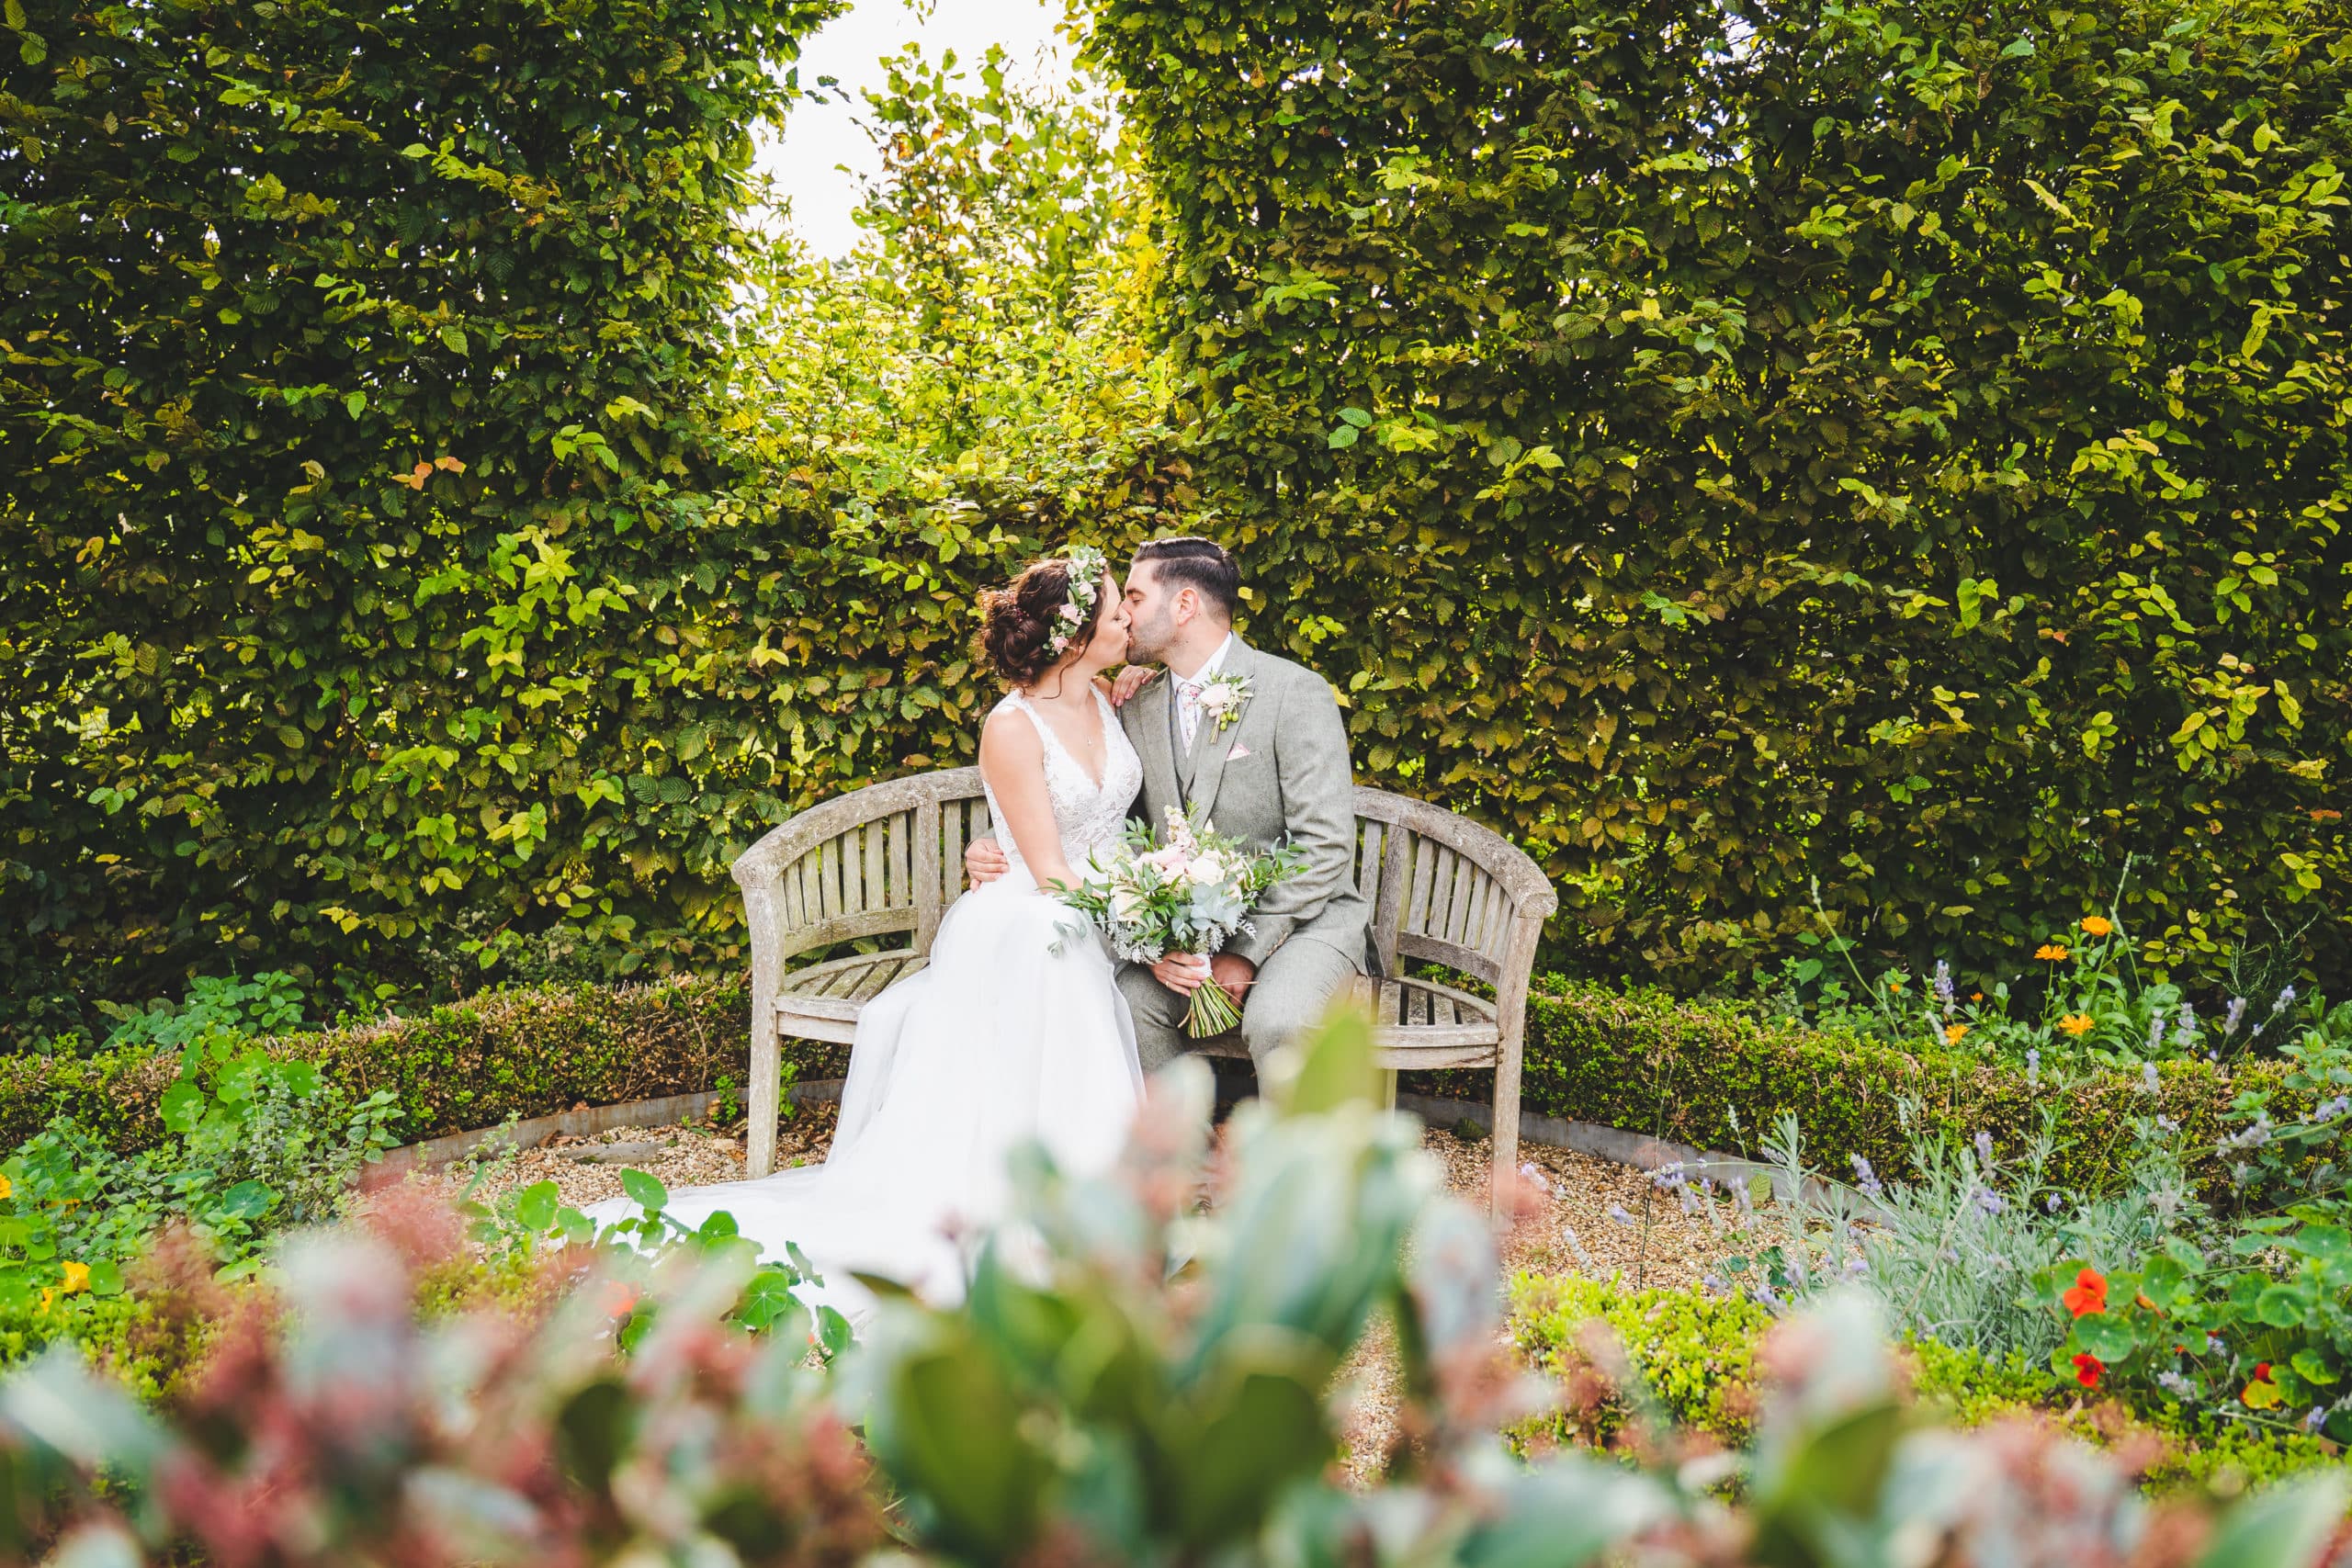 Couple kiss in Herb Garden at Rustic Farm Wedding Venue Cambridgeshire